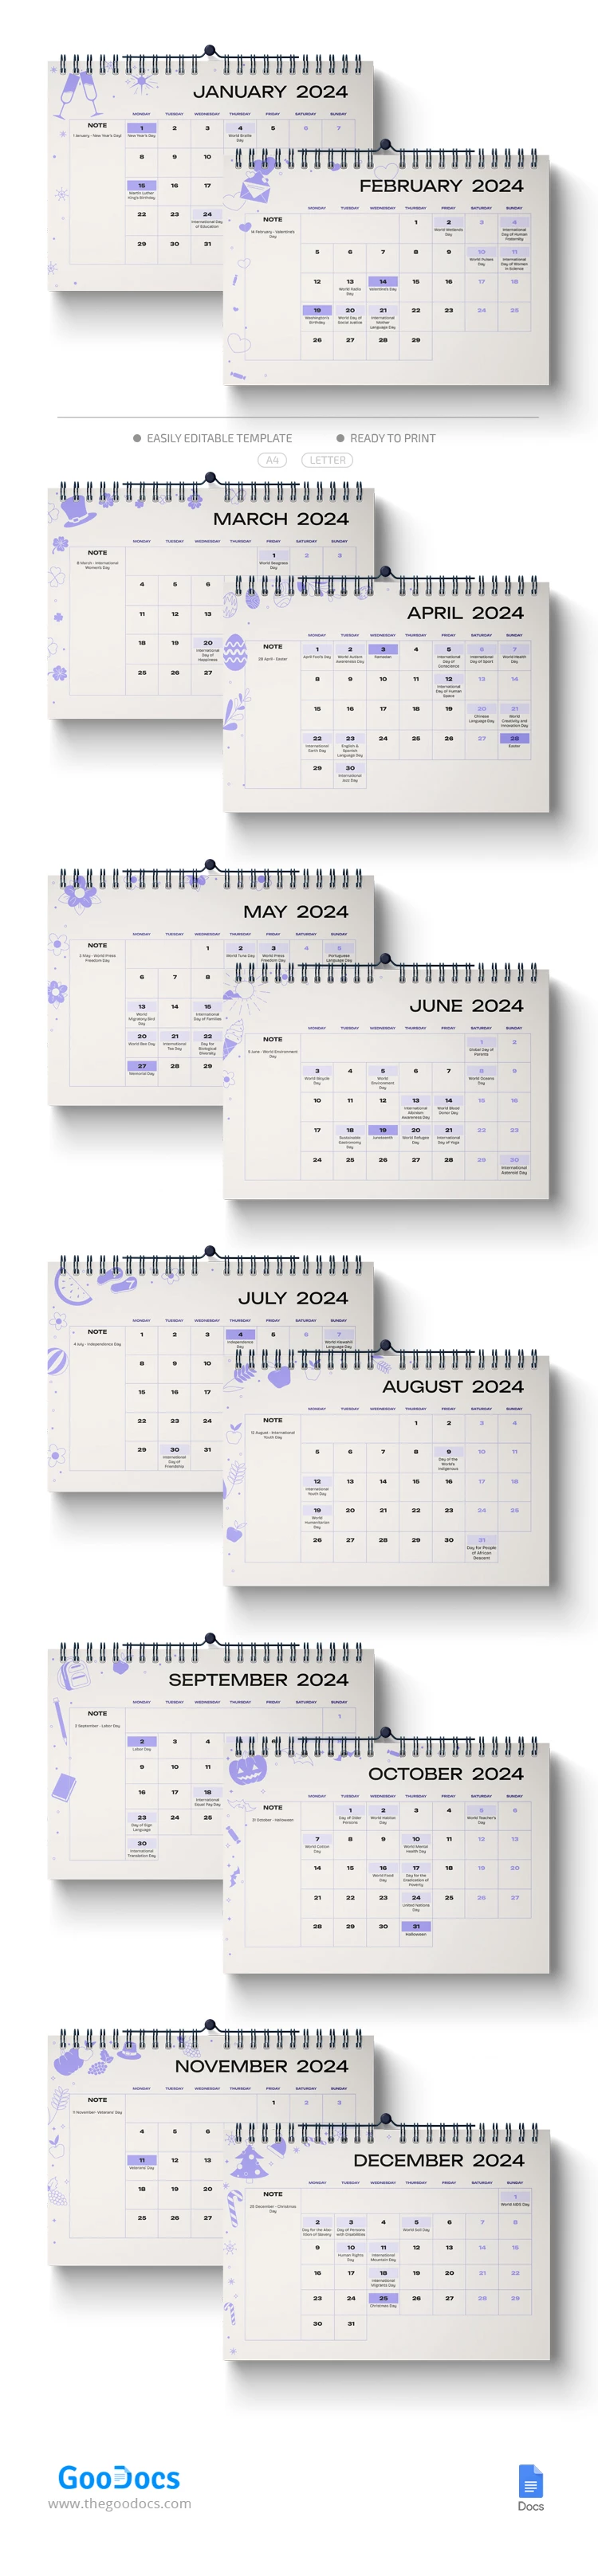 2024 Holidays Calendar - free Google Docs Template - 10068550